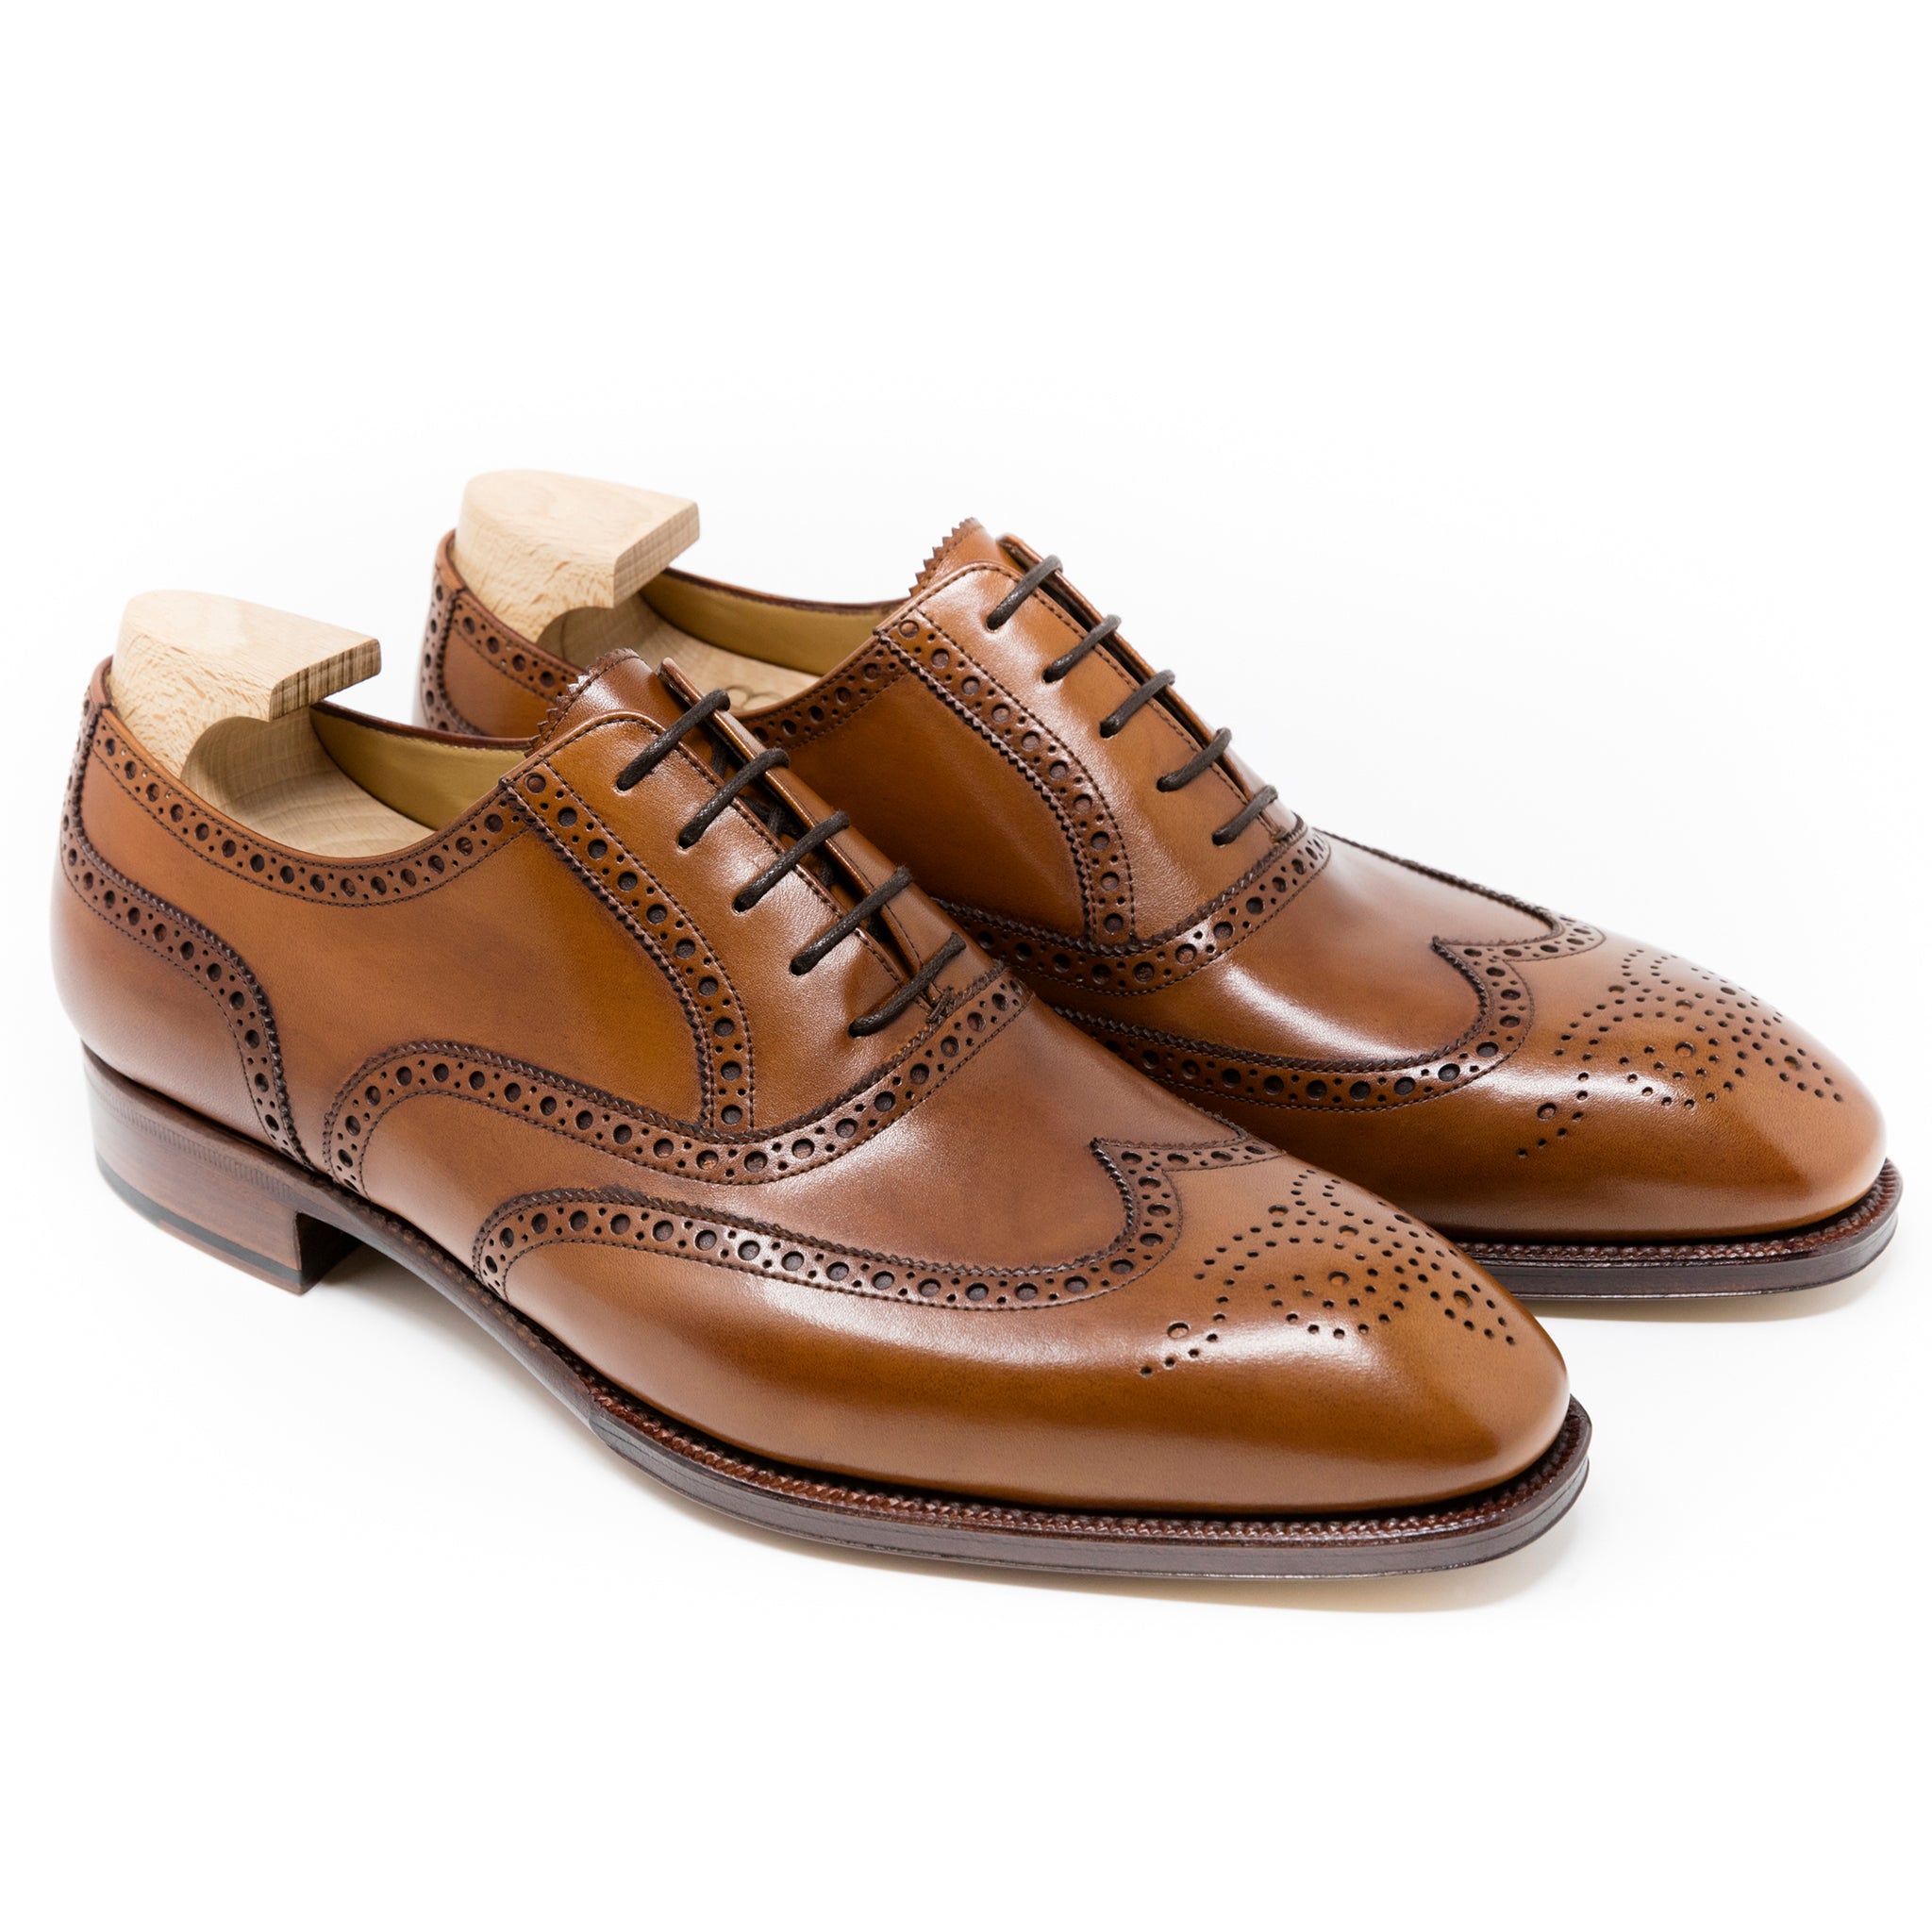 TLB Mallorca Oxford shoes | Men's Oxford shoes | model Alan vegano ...